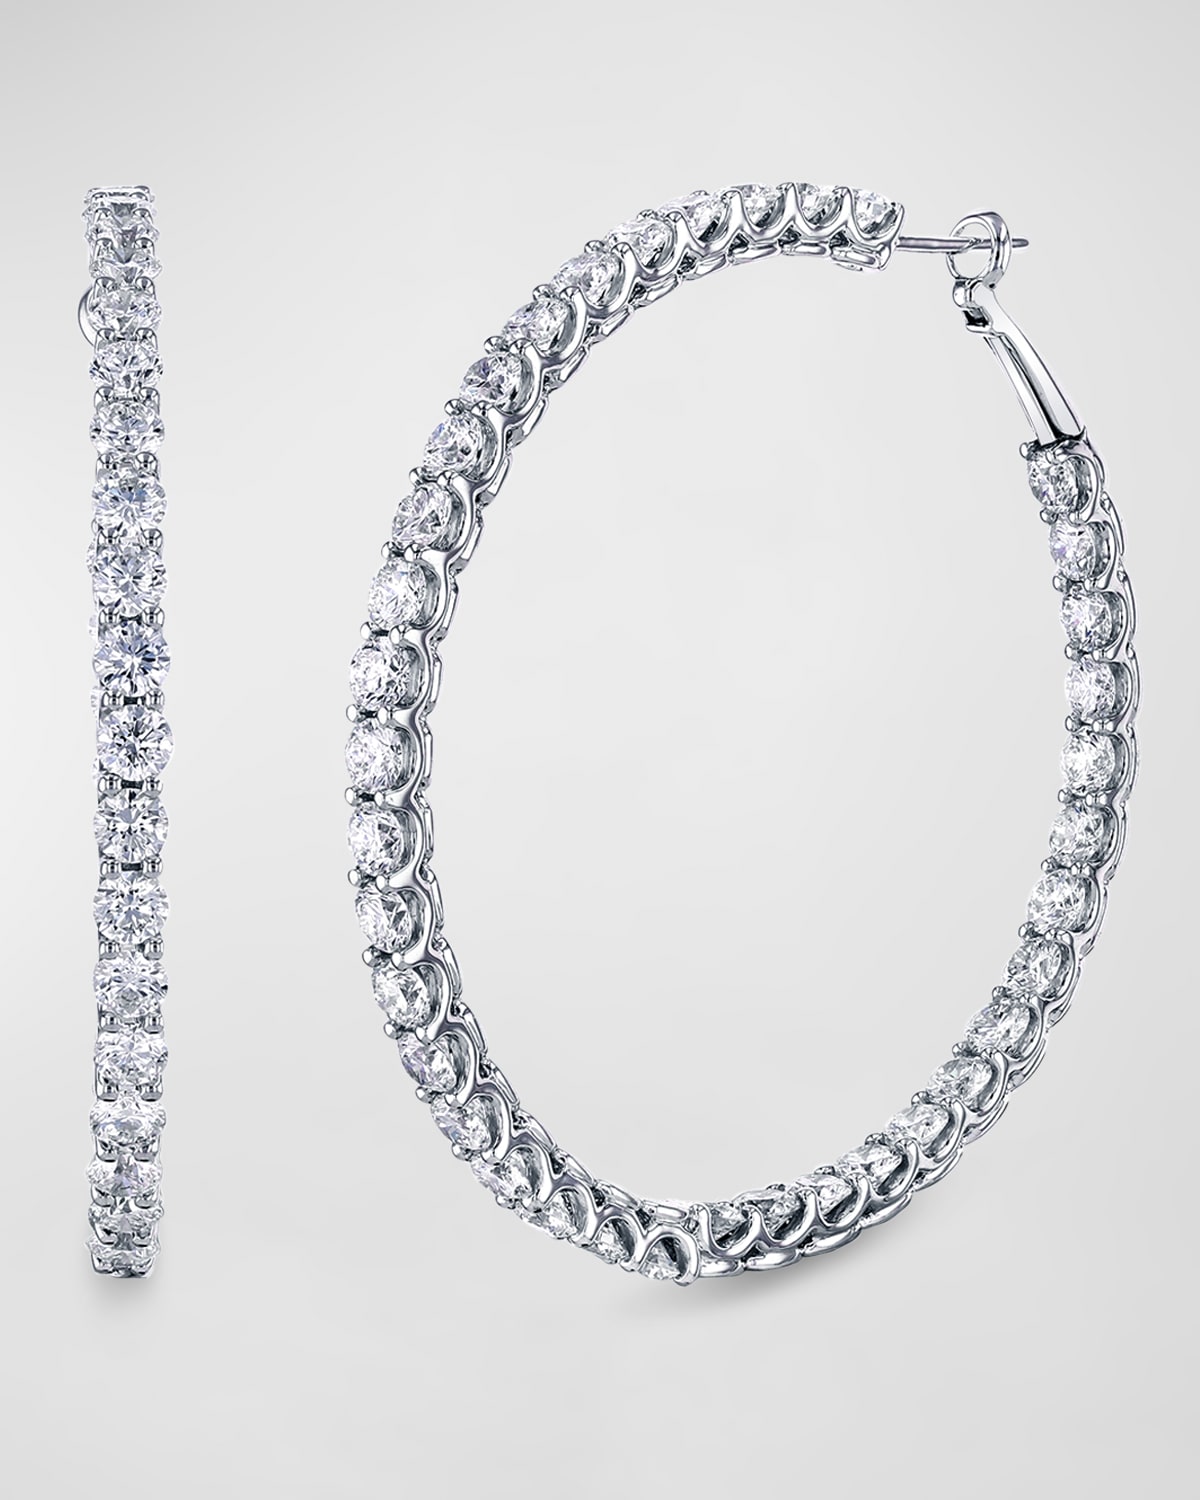 18K White Gold Round Diamond Medium Wire Cup Hoop Earrings, 2"L